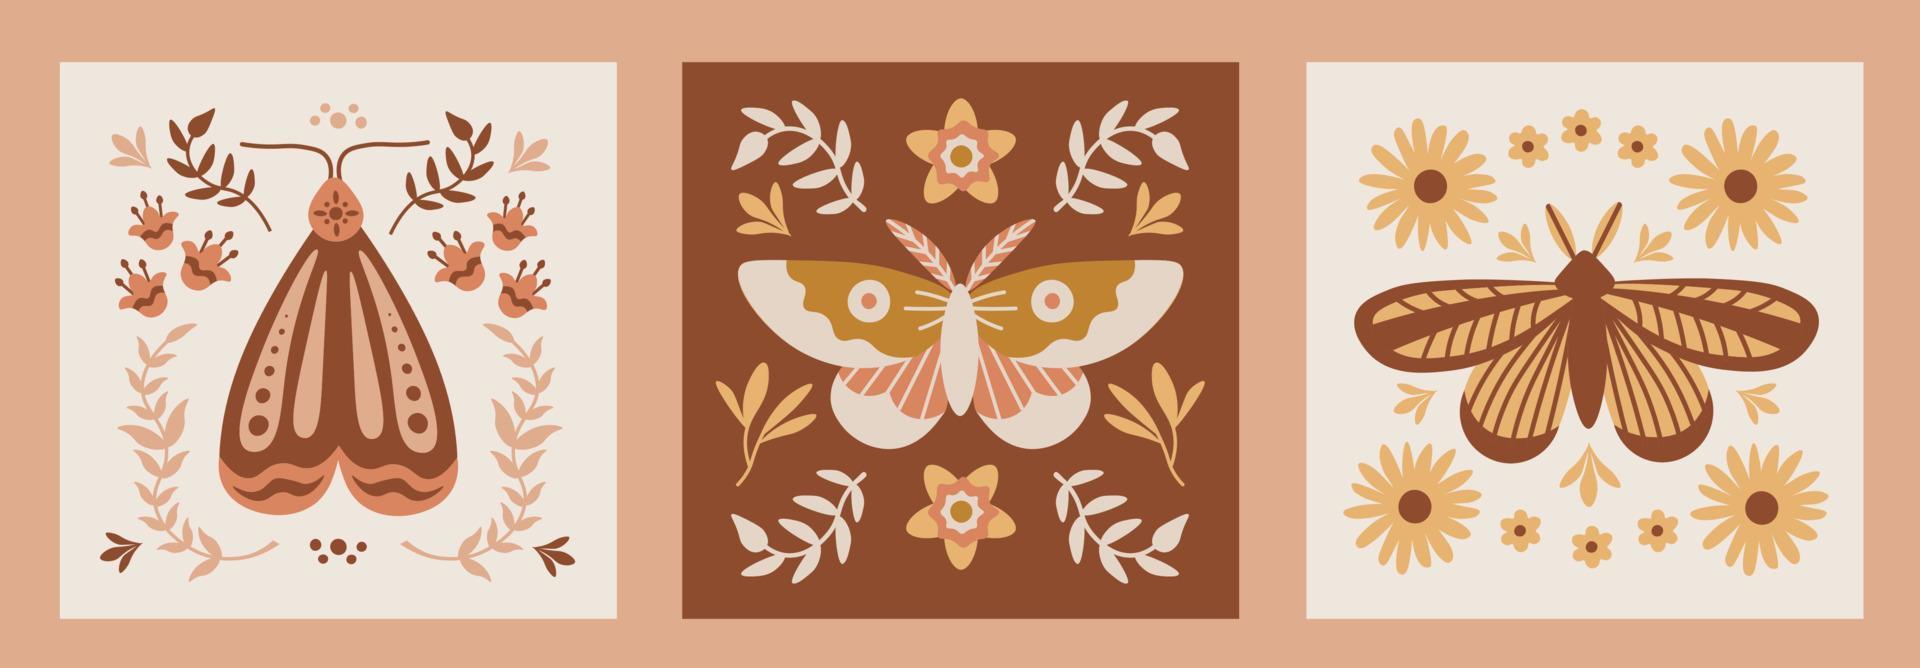 Boho Moth cards vector set